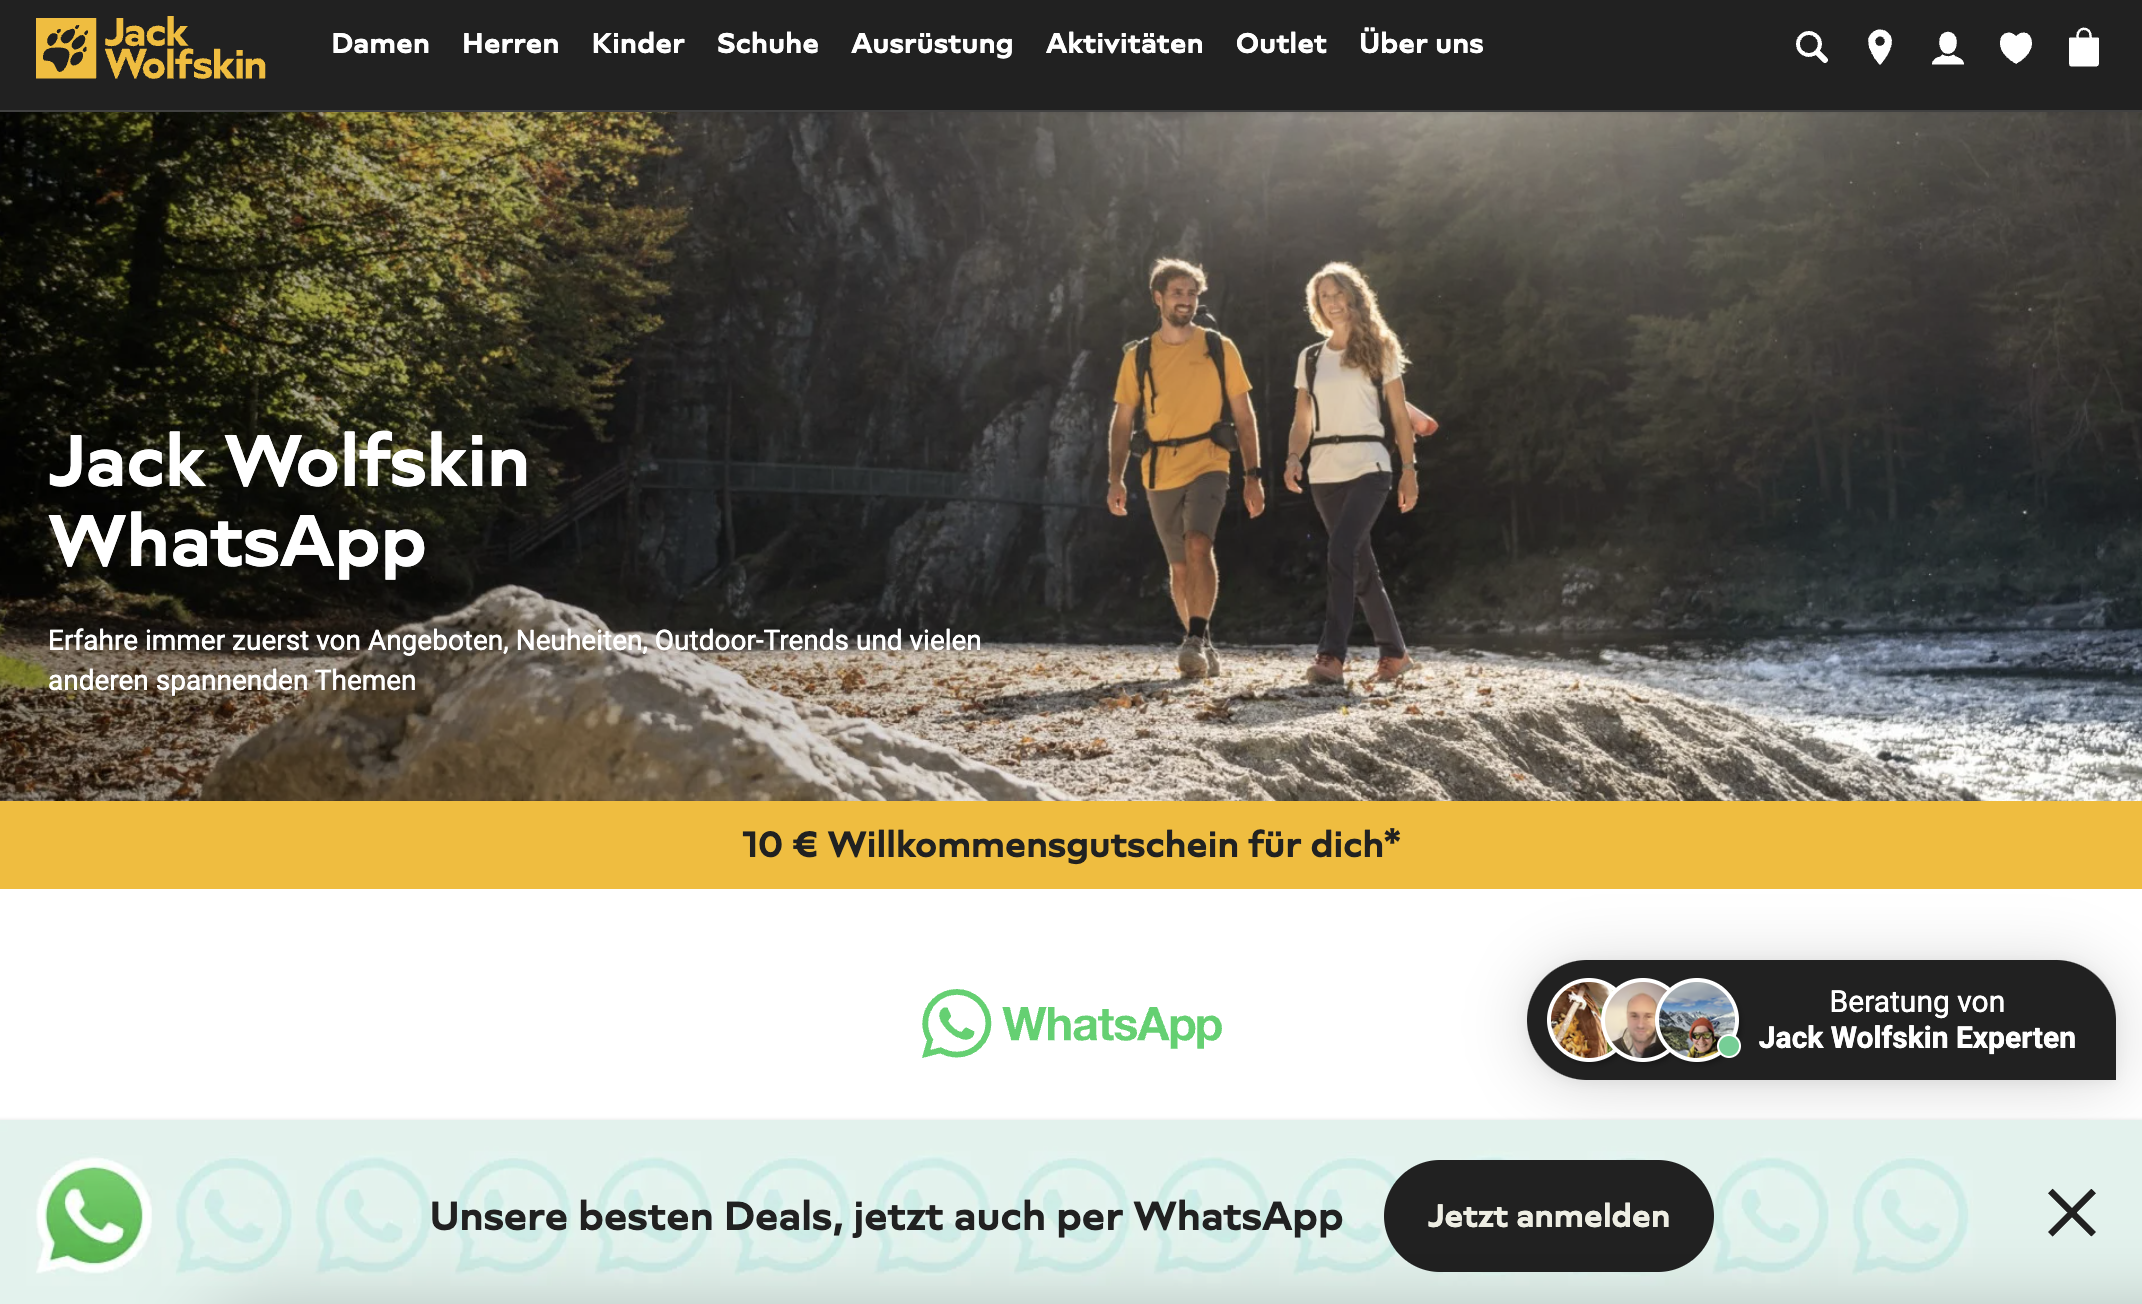 Jack Wolfskin WhatsApp promo with charles